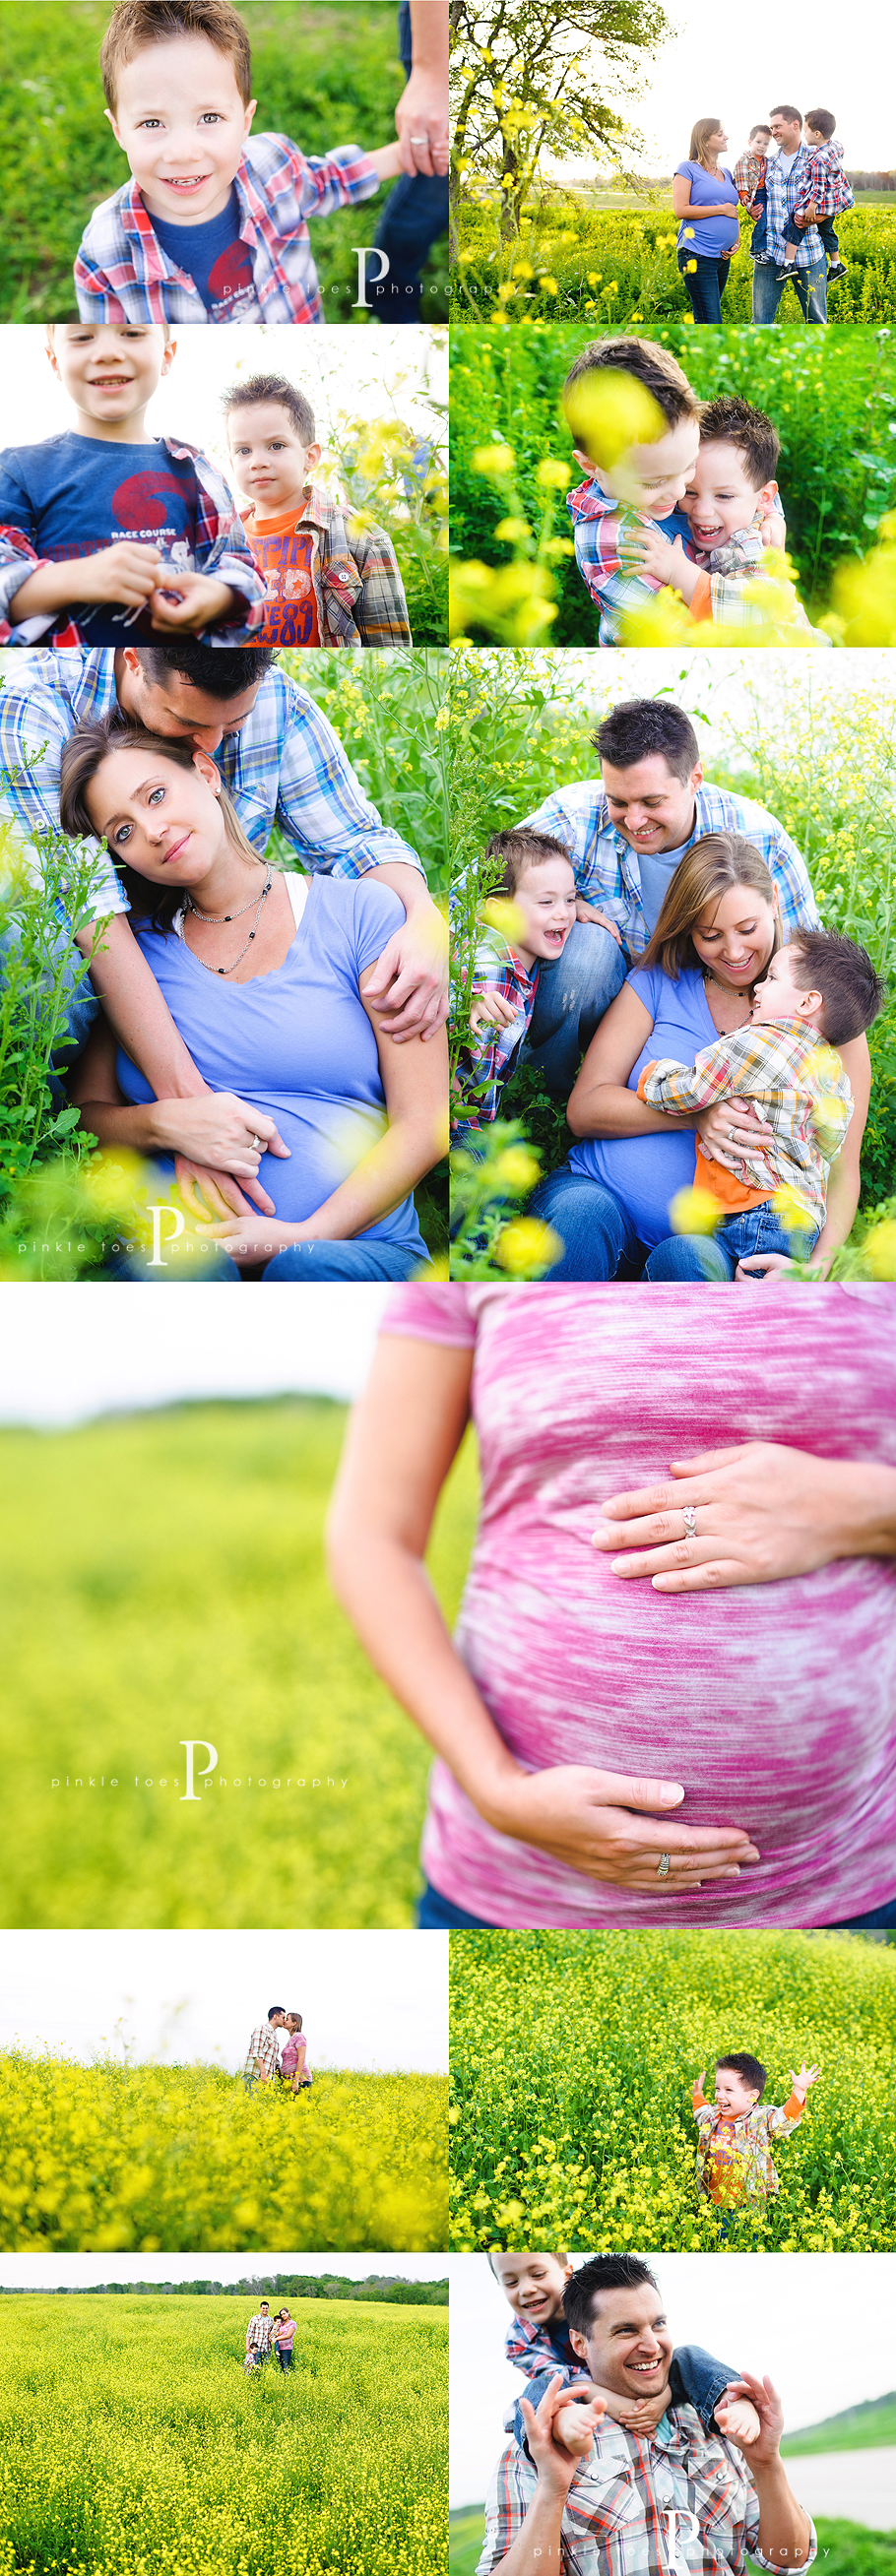 ac-austin-maternity-lifestyle-family-beautiful-natural-candid-photographer.jpg